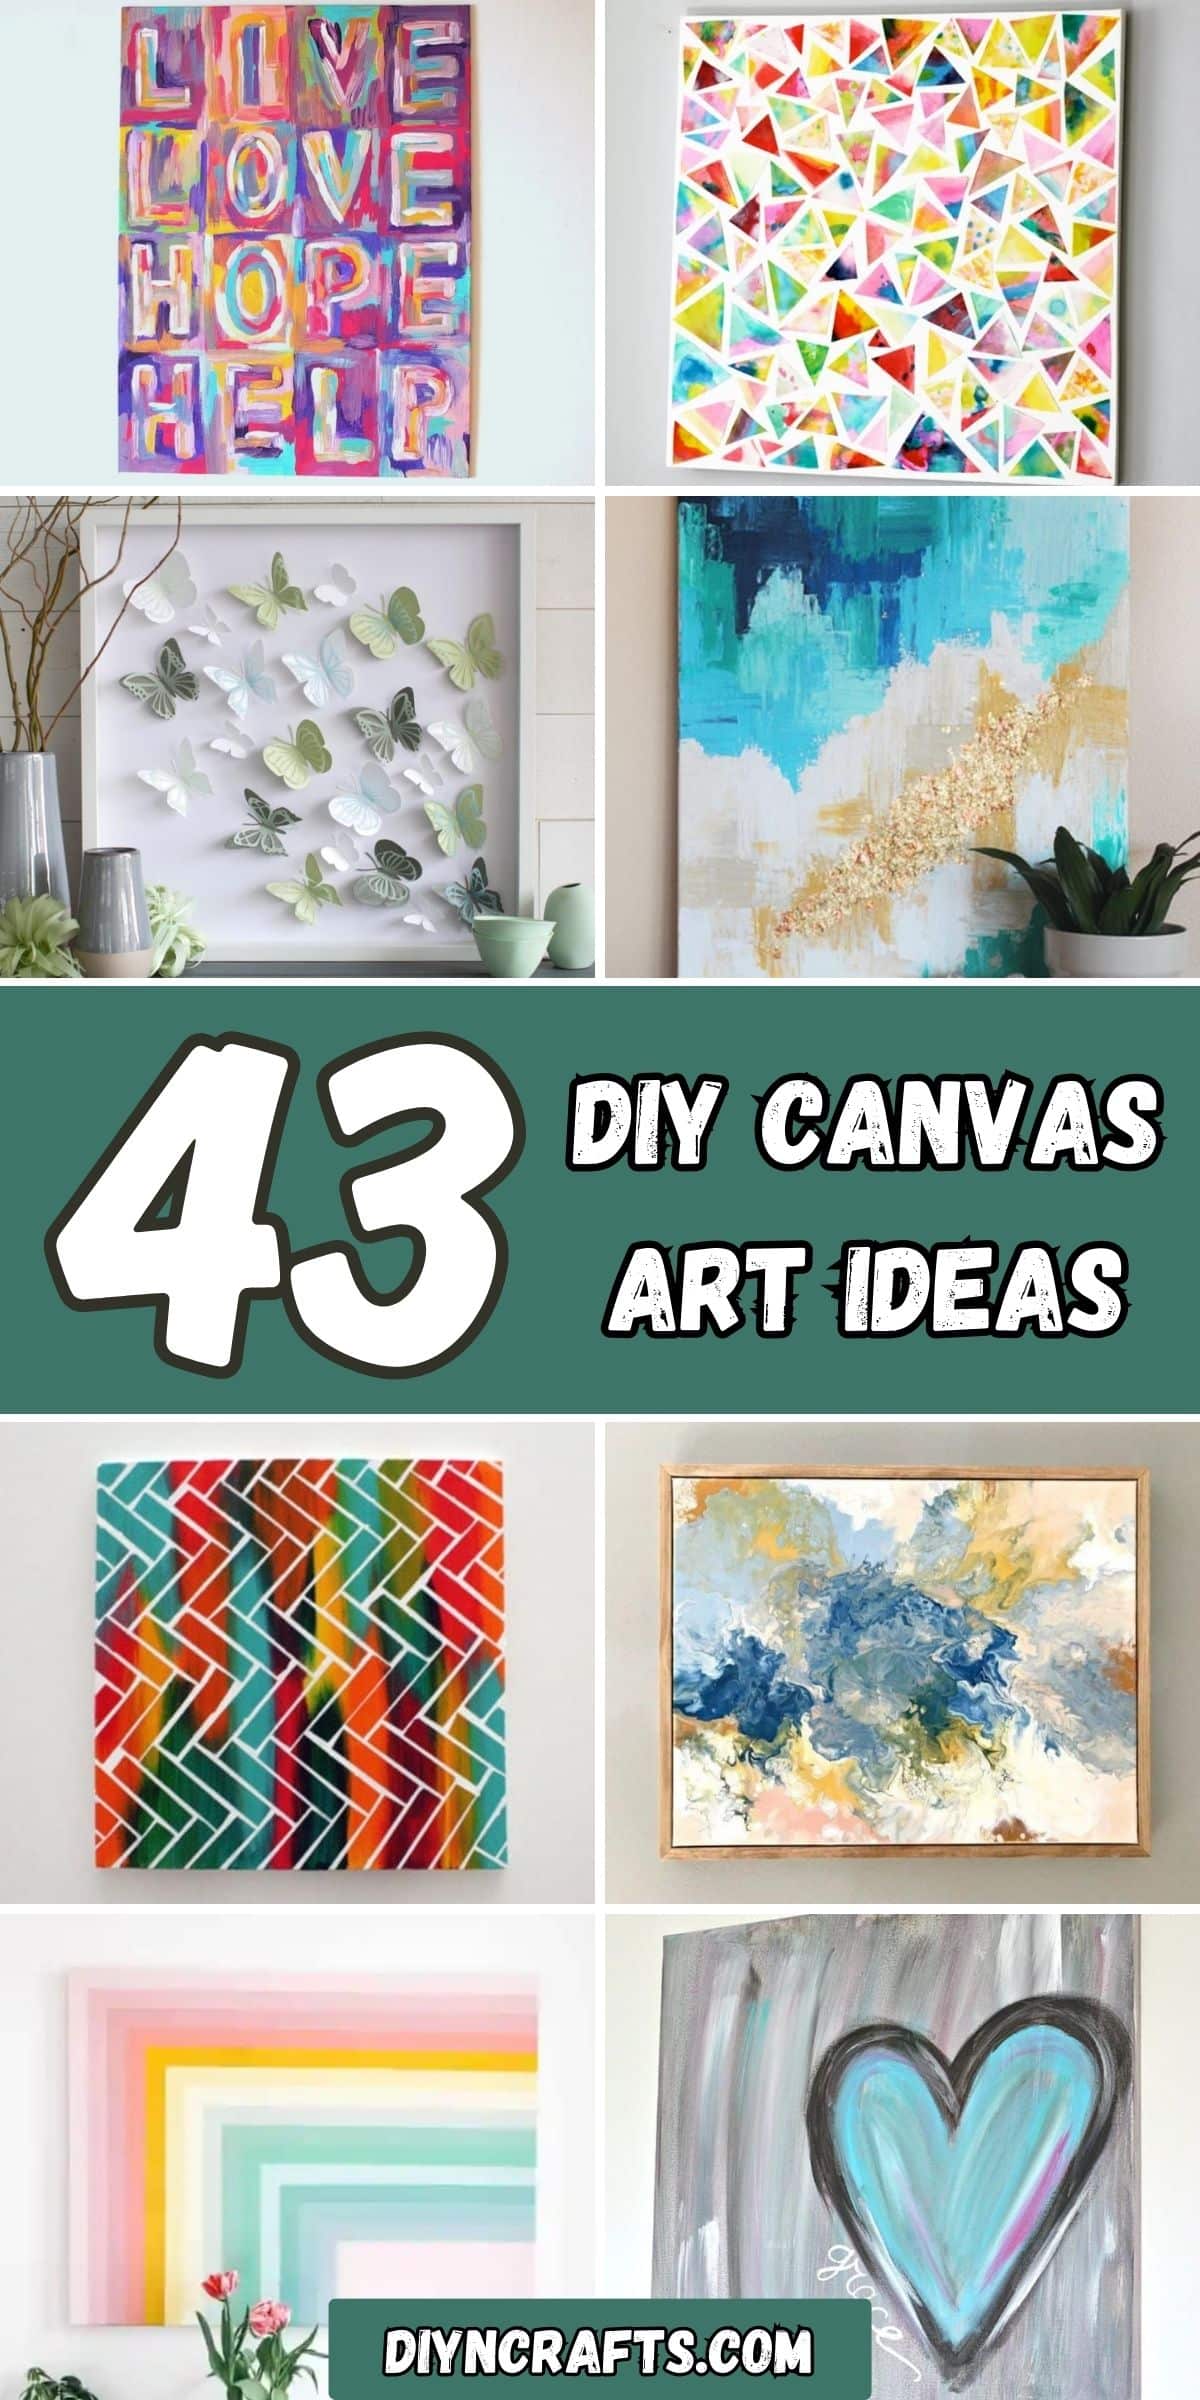 43 DIY Canvas Art Ideas collage.